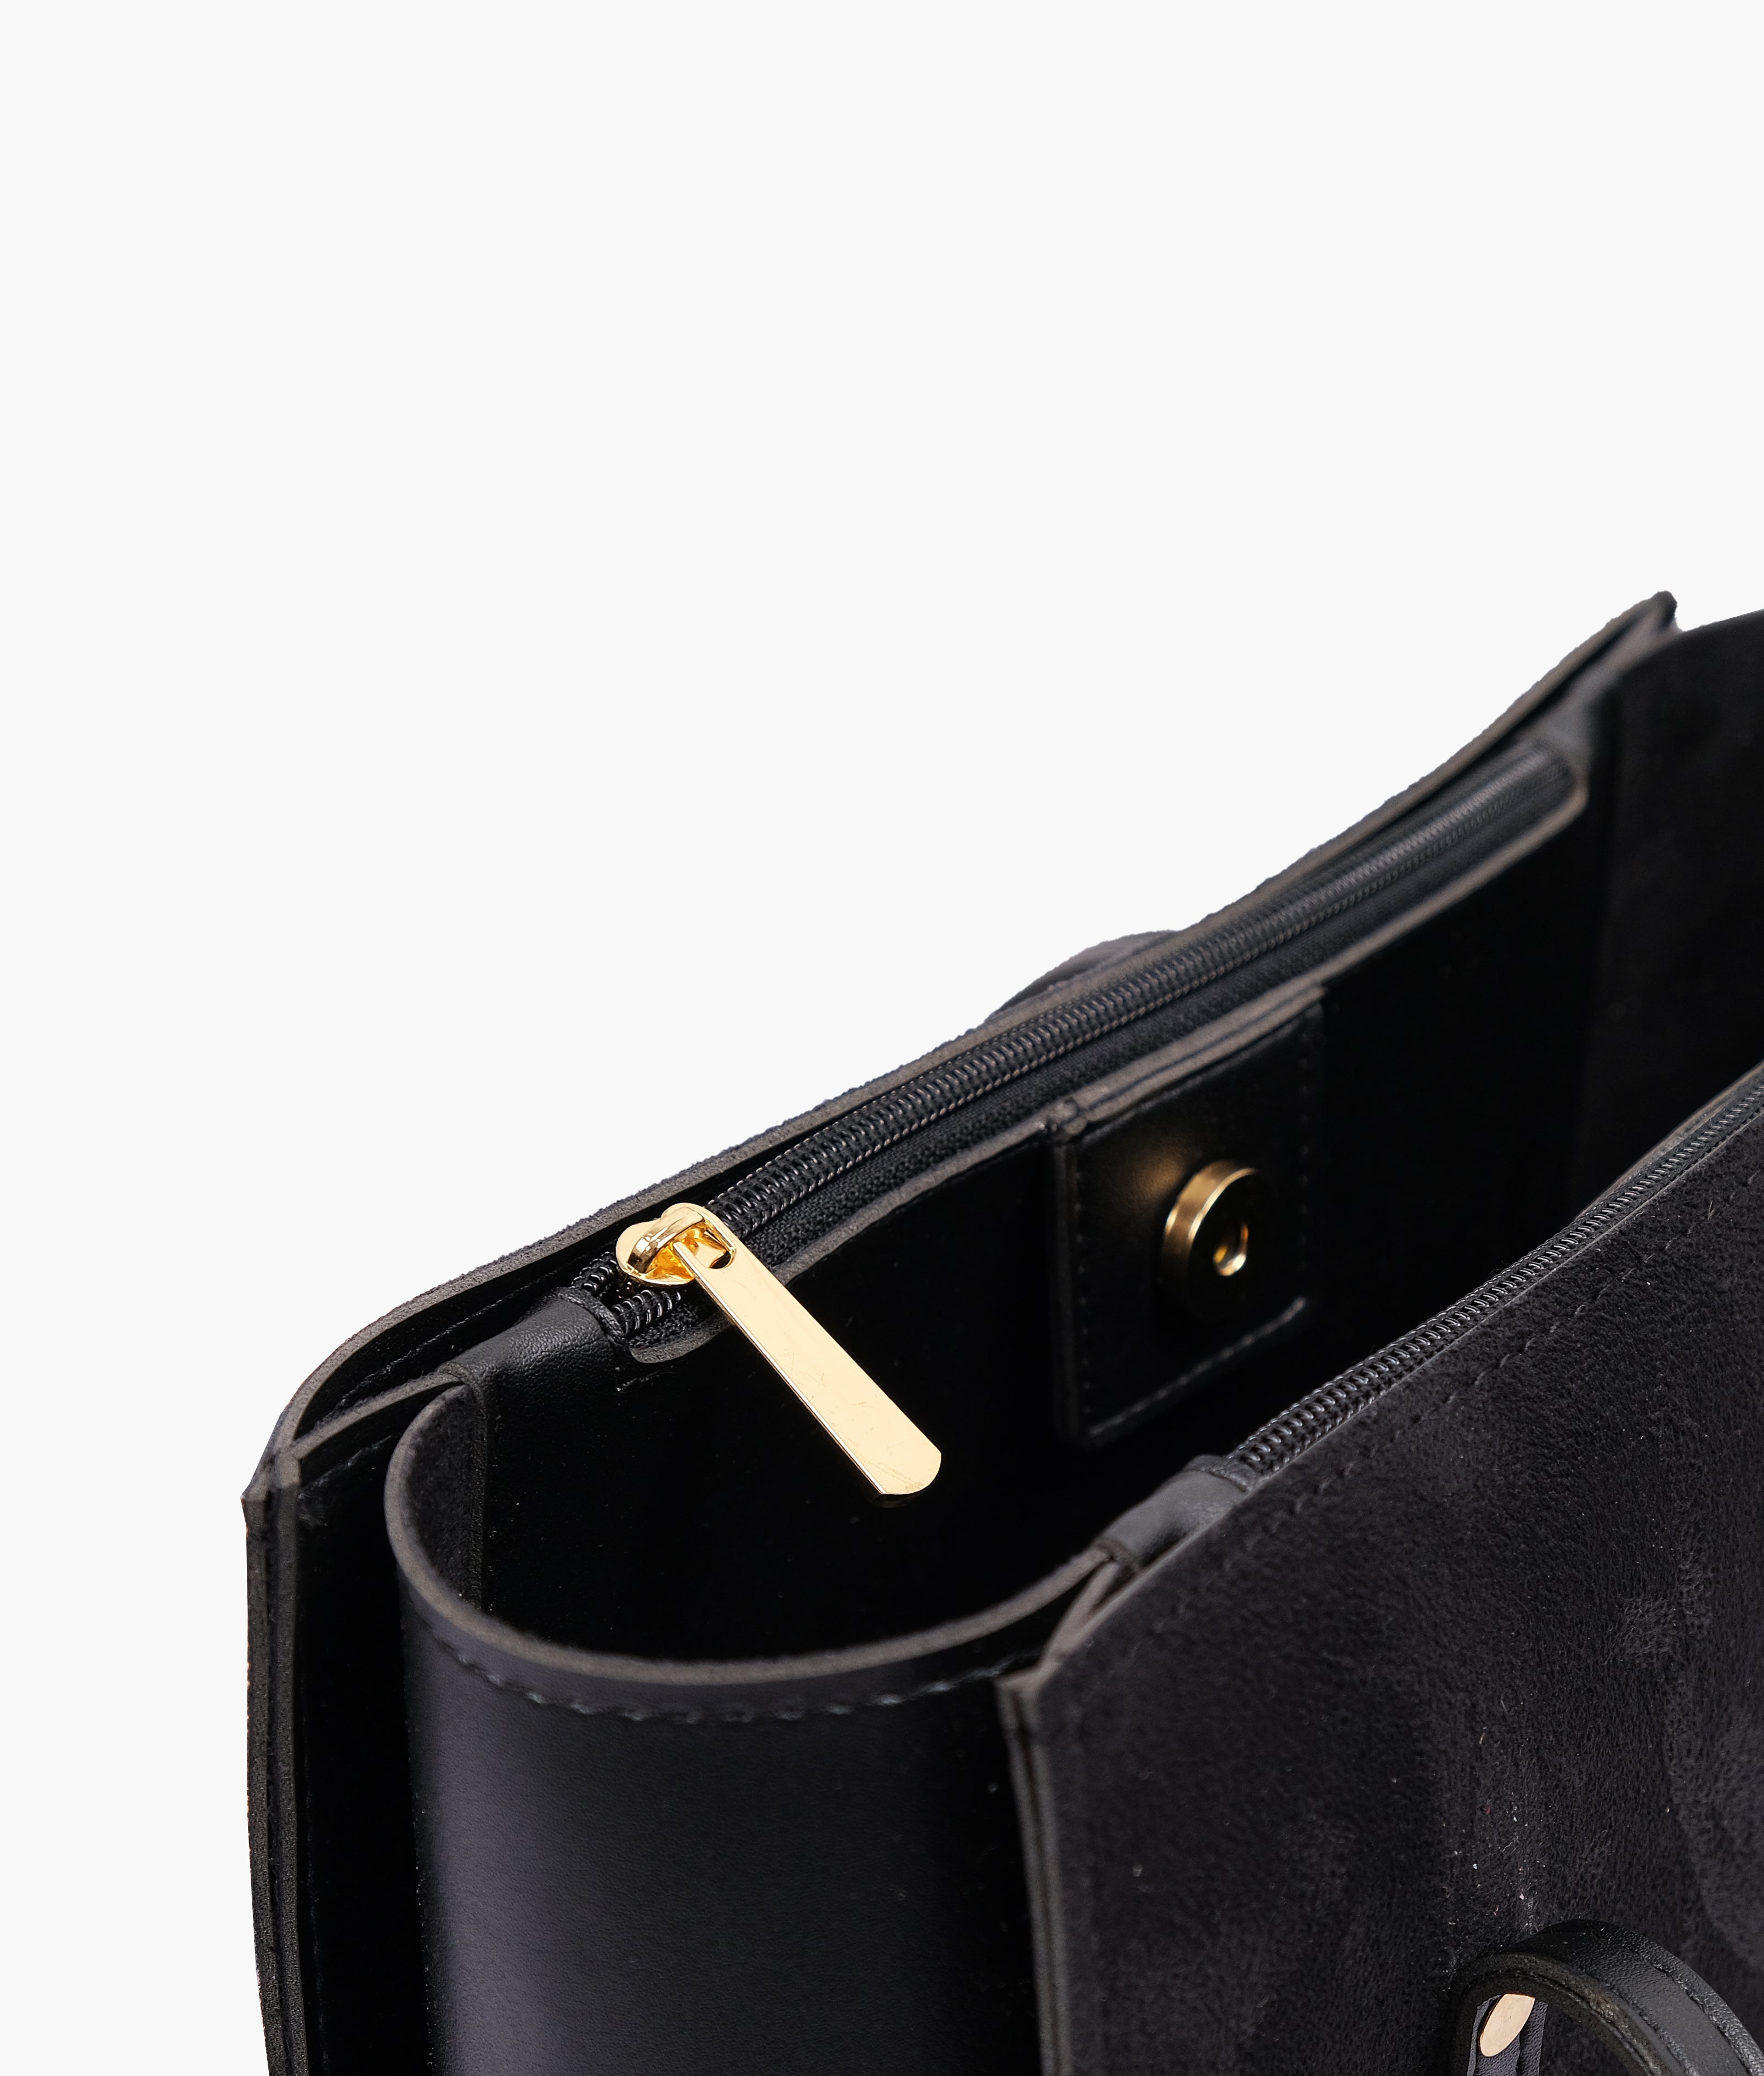 Black suede zipper shoulder bag with long handle